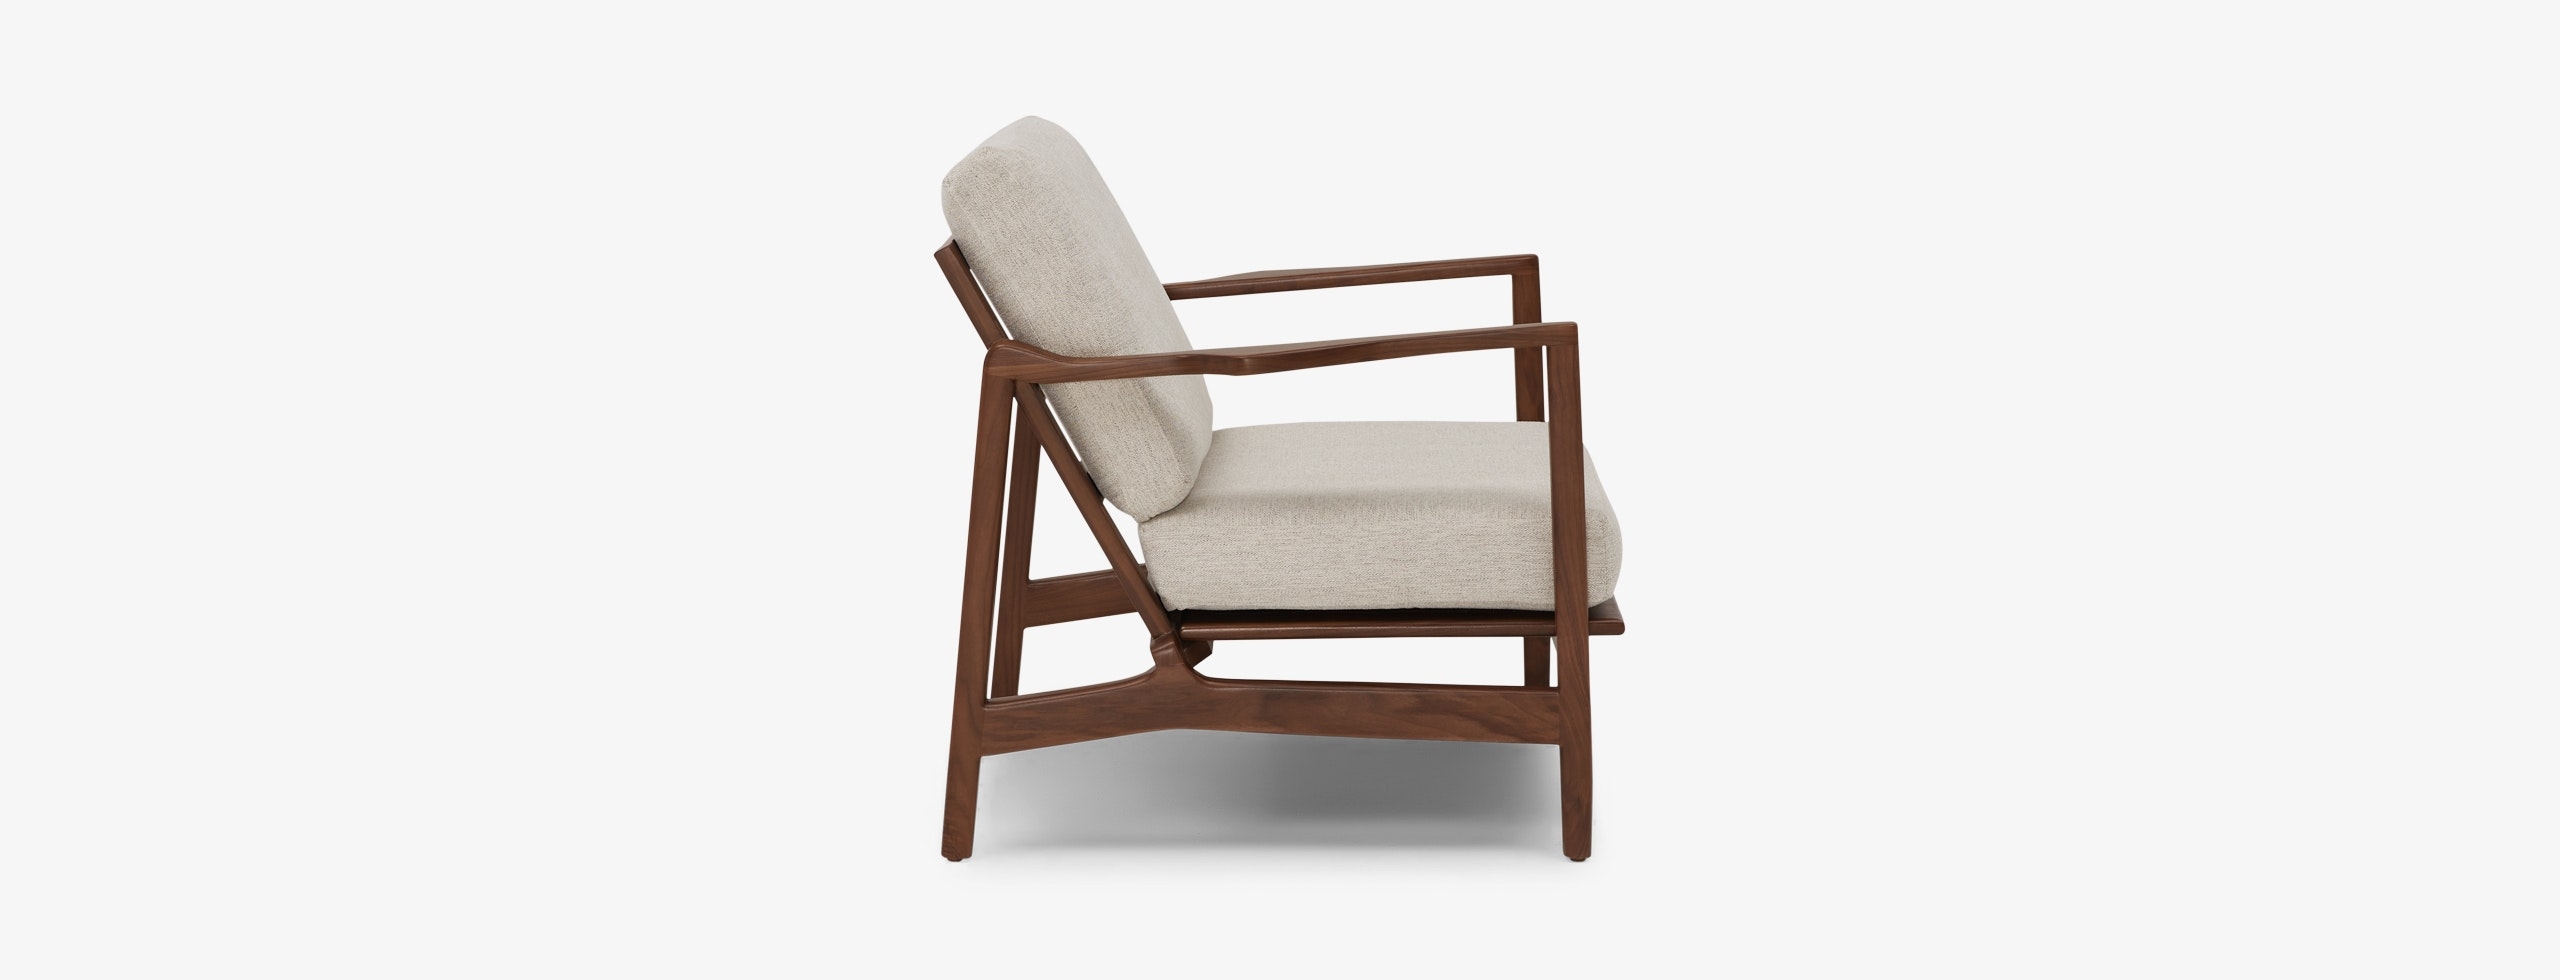 Graham Chair - Image 1